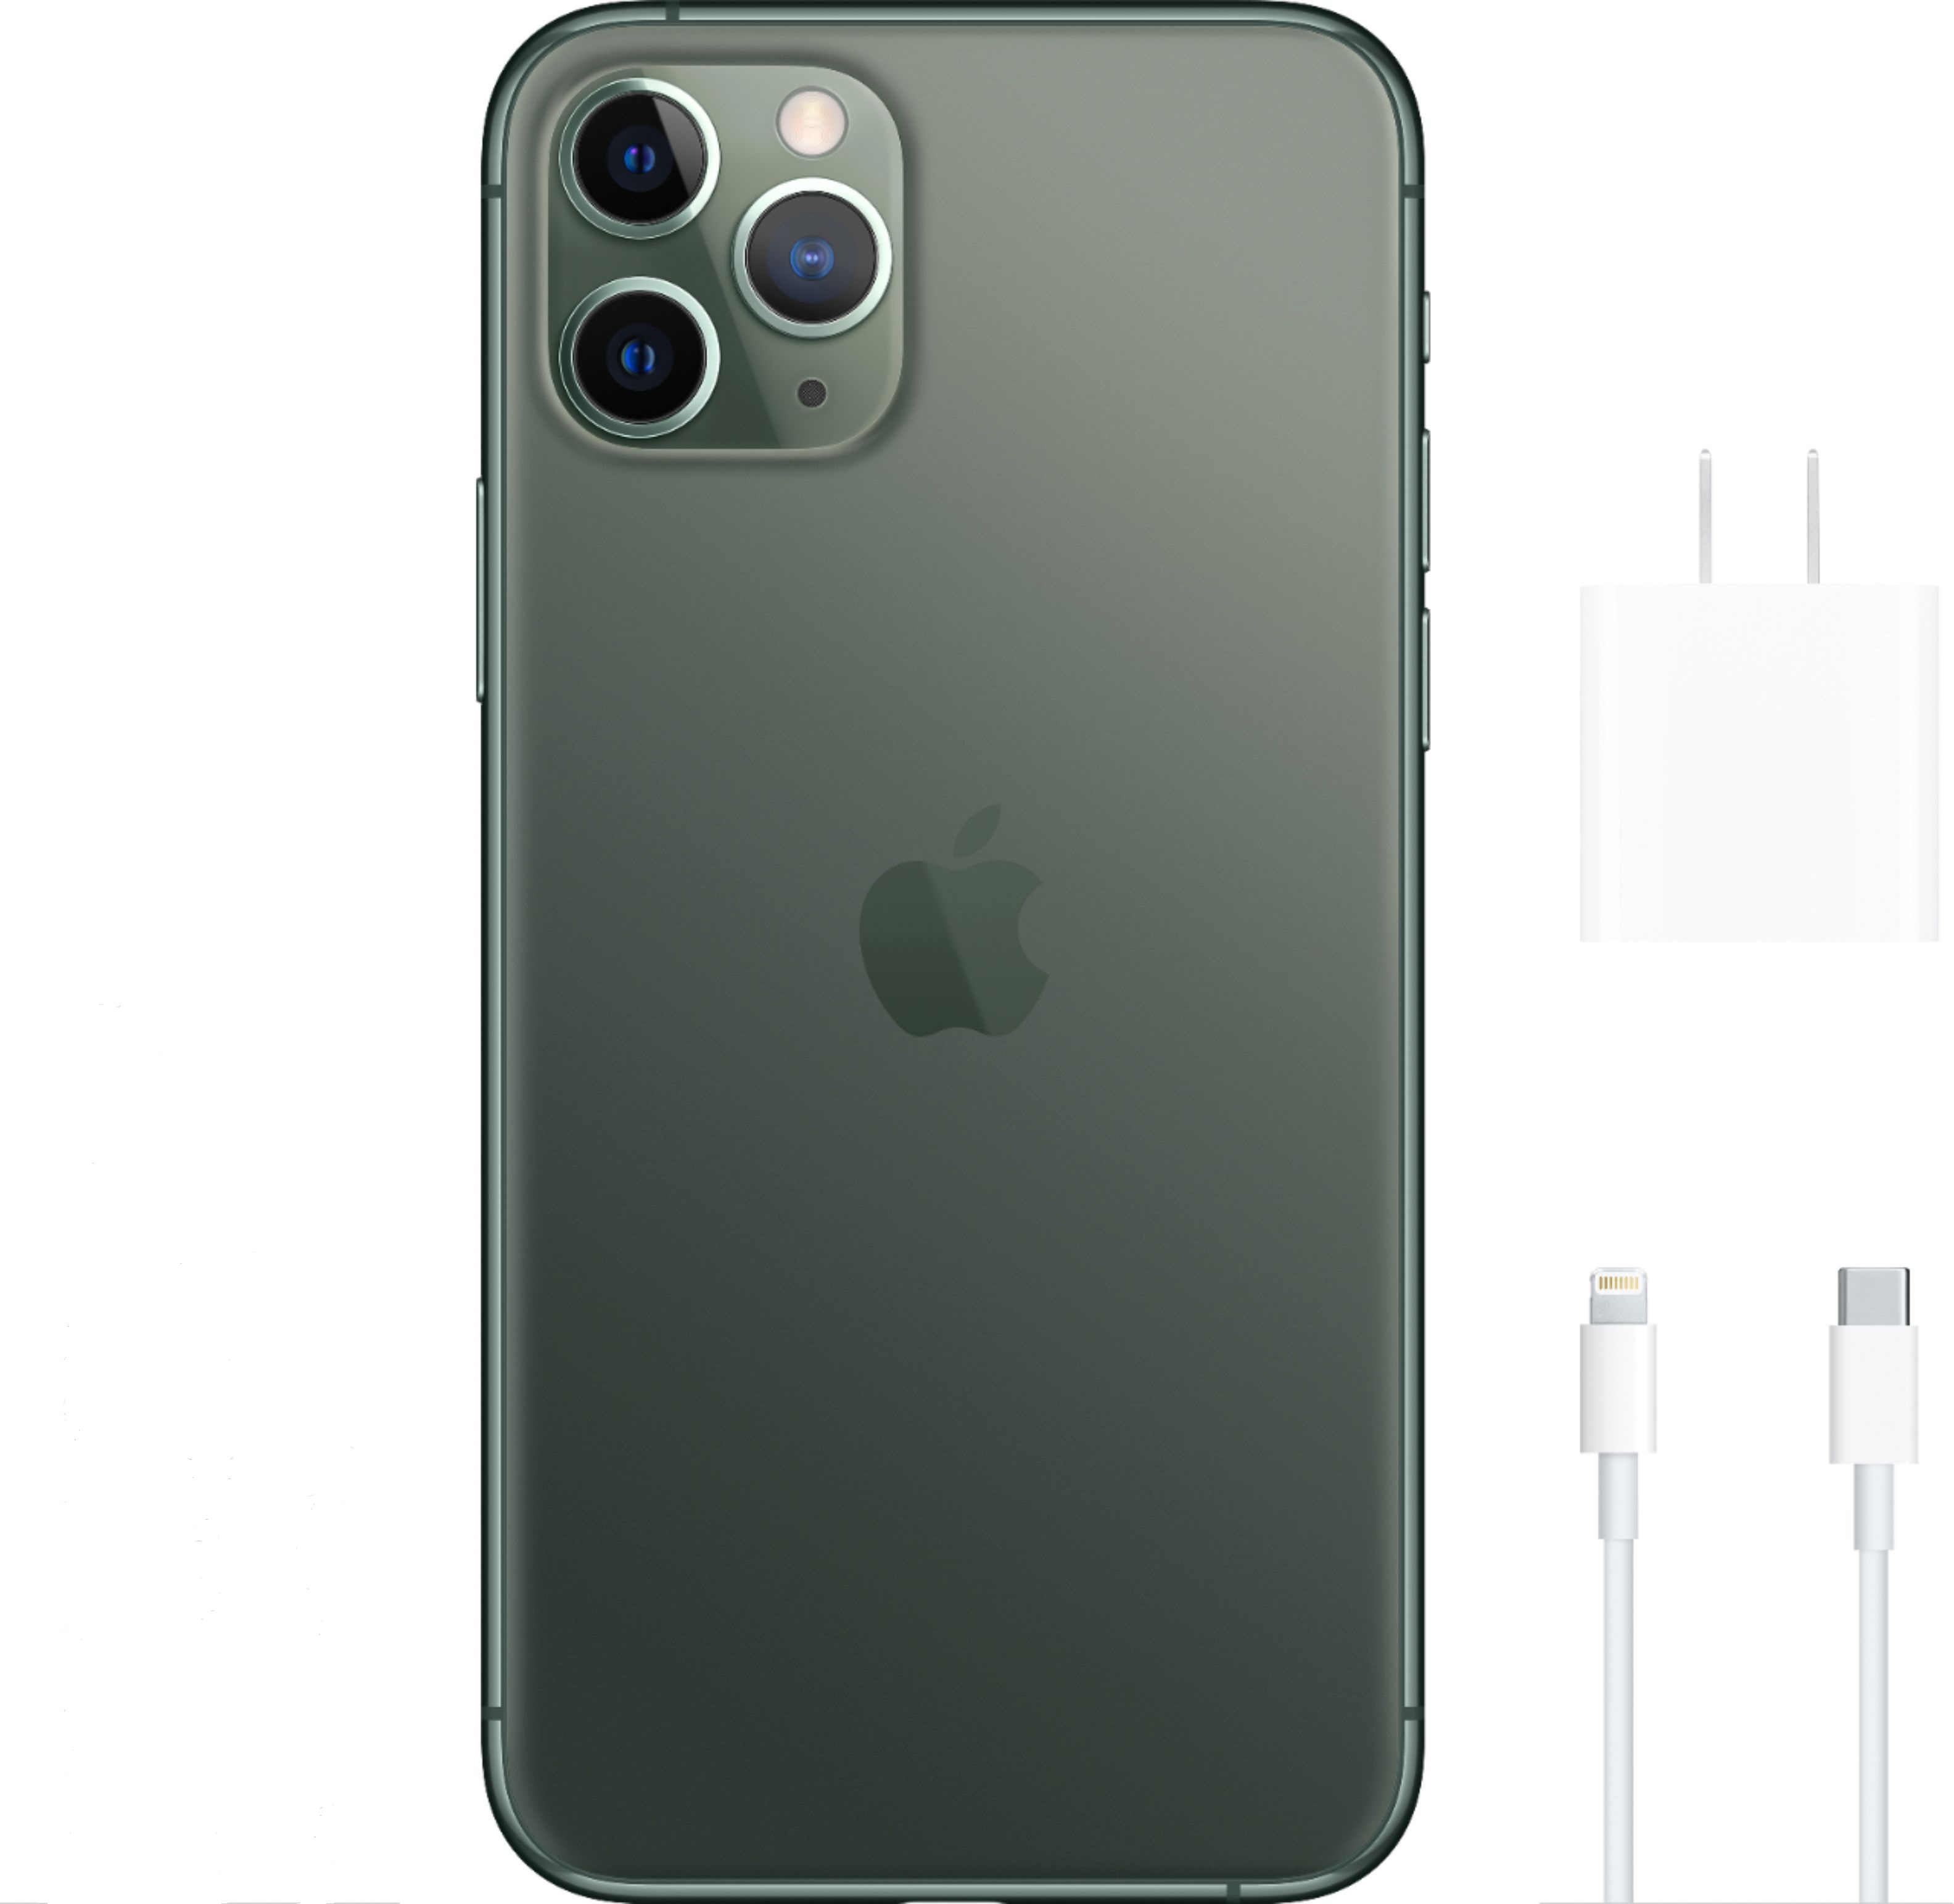 Apple iPhone 11 Pro Max 256GB Fully Unlocked (Verizon + Sprint + GSM Unlocked) - Midnight Green&nbsp;(Used- B Grade) - image 4 of 4